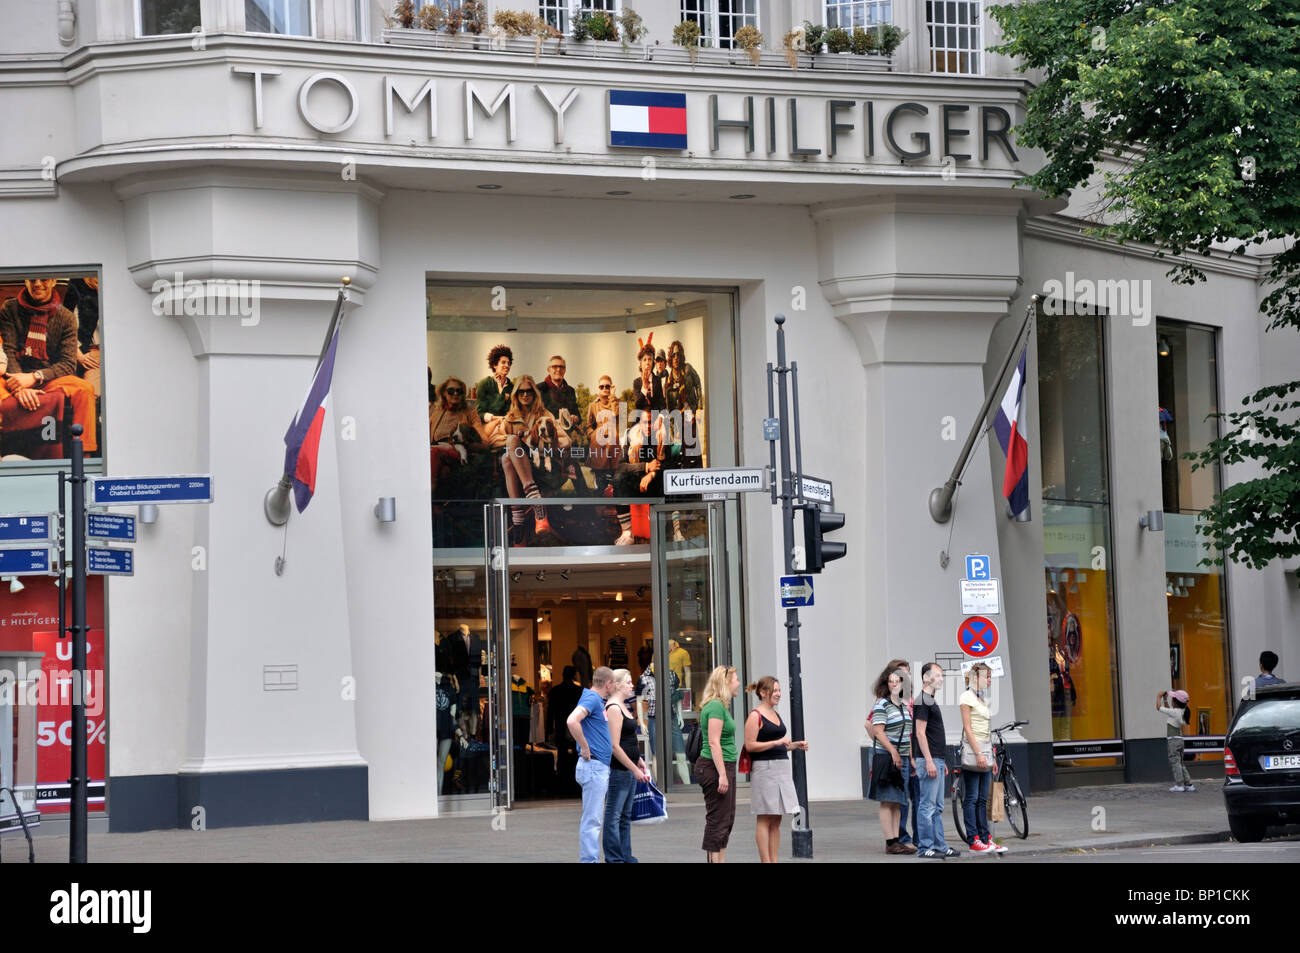 Tommy Hilfiger store in Kurfurstendamm Berlin Germany July 2010 Stock Photo  - Alamy